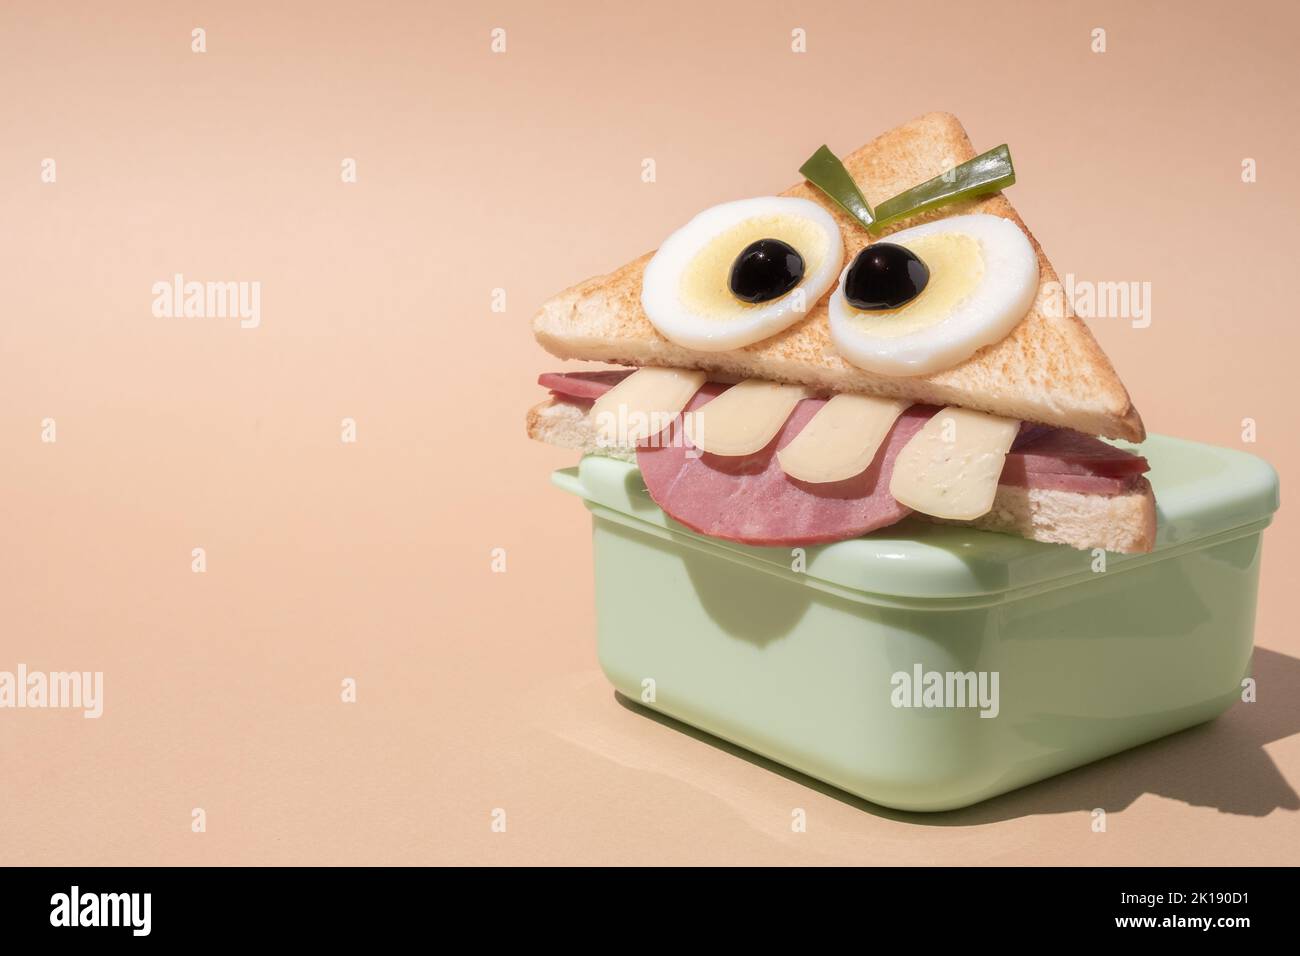 Fun Halloween monster sandwich Stock Photo